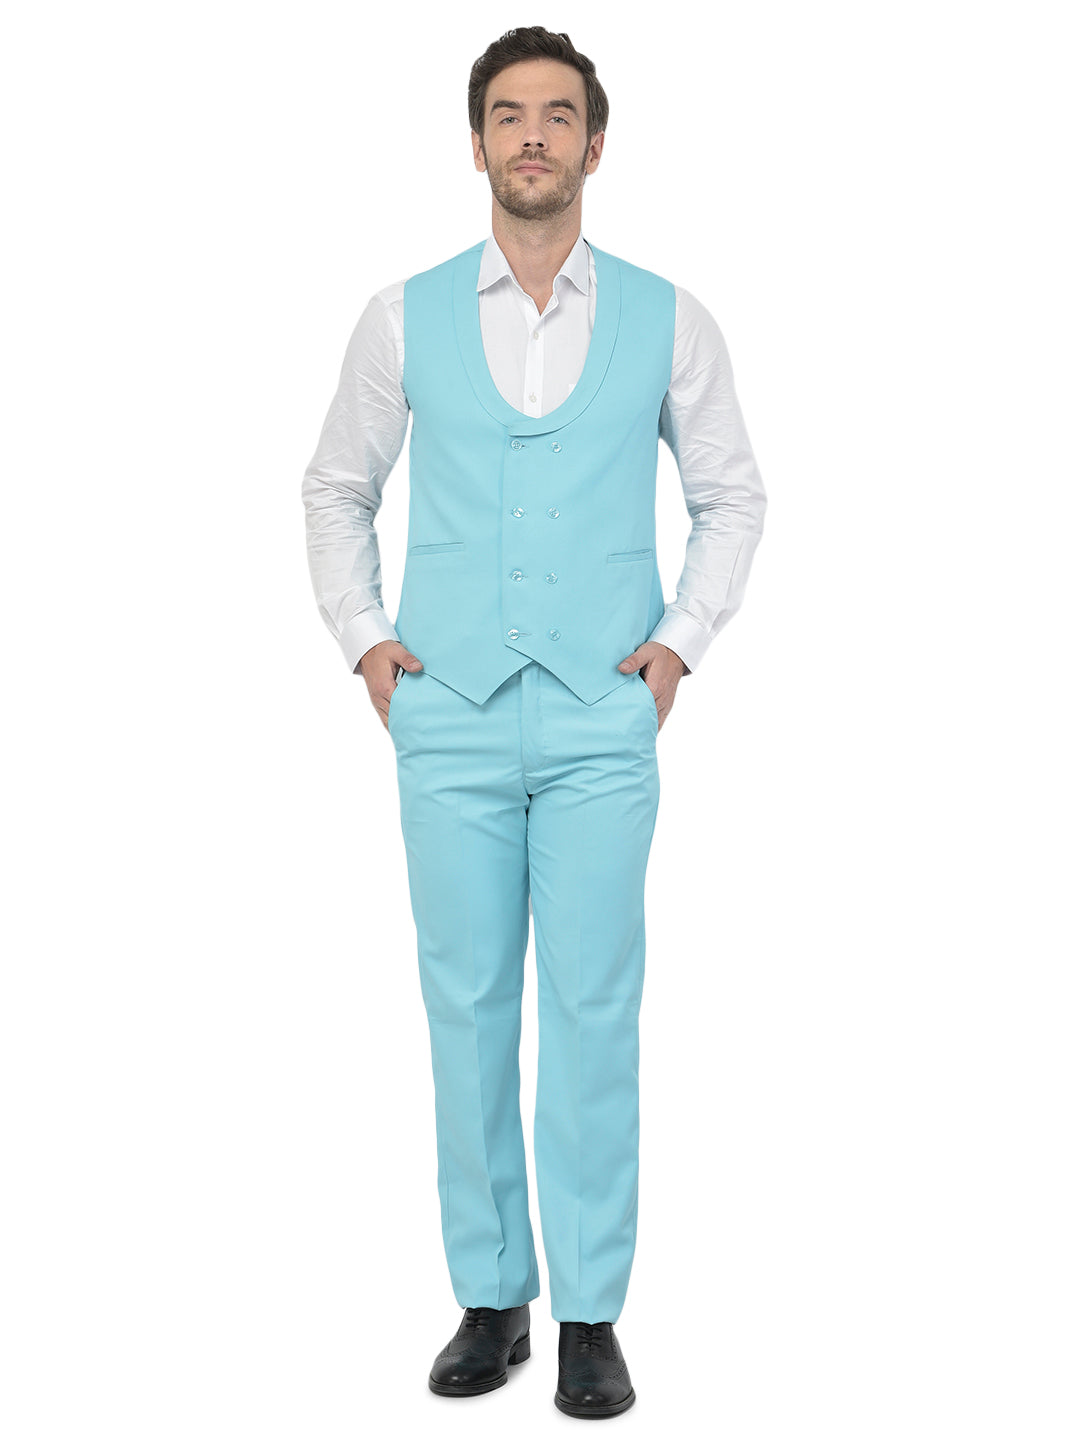 SG RAJASAHAB Suits & Sets For Men (RSWP-201)